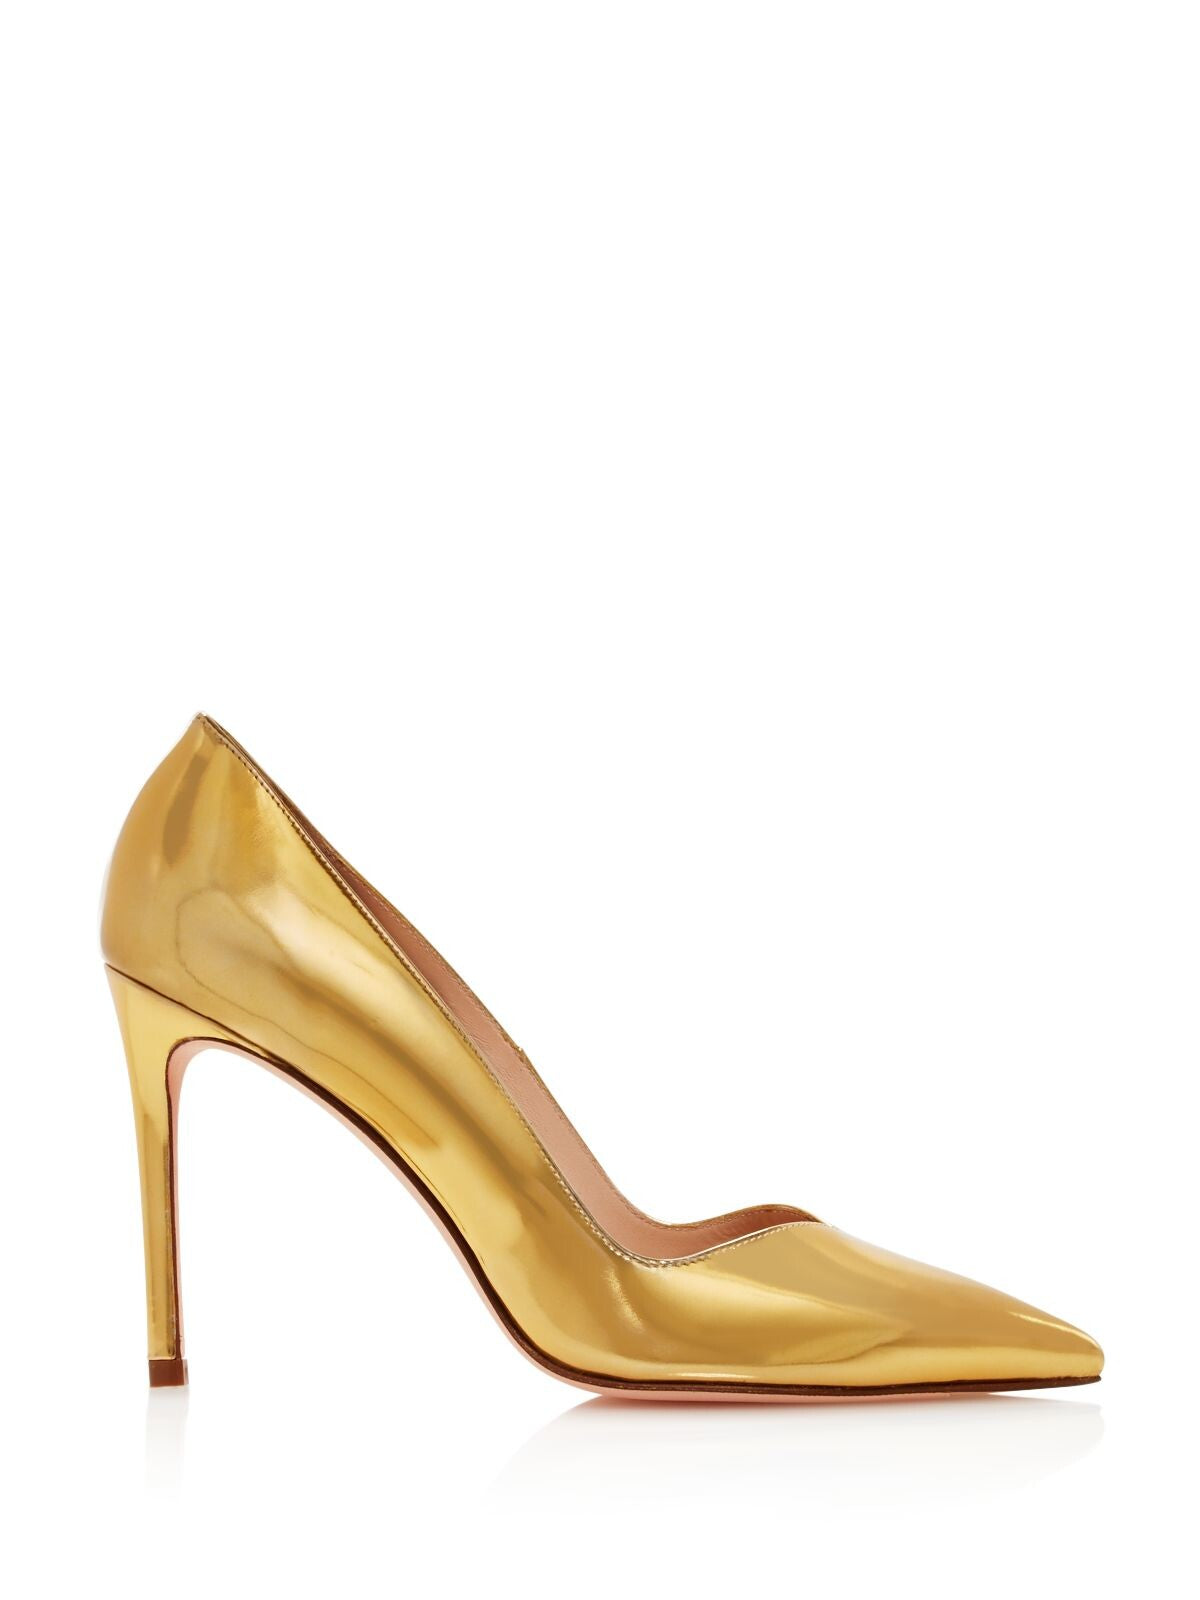 STUART WEITZMAN Womens Gold Comfort Metallic Anny Pointed Toe Stiletto Slip On Dress Pumps Shoes 8 M